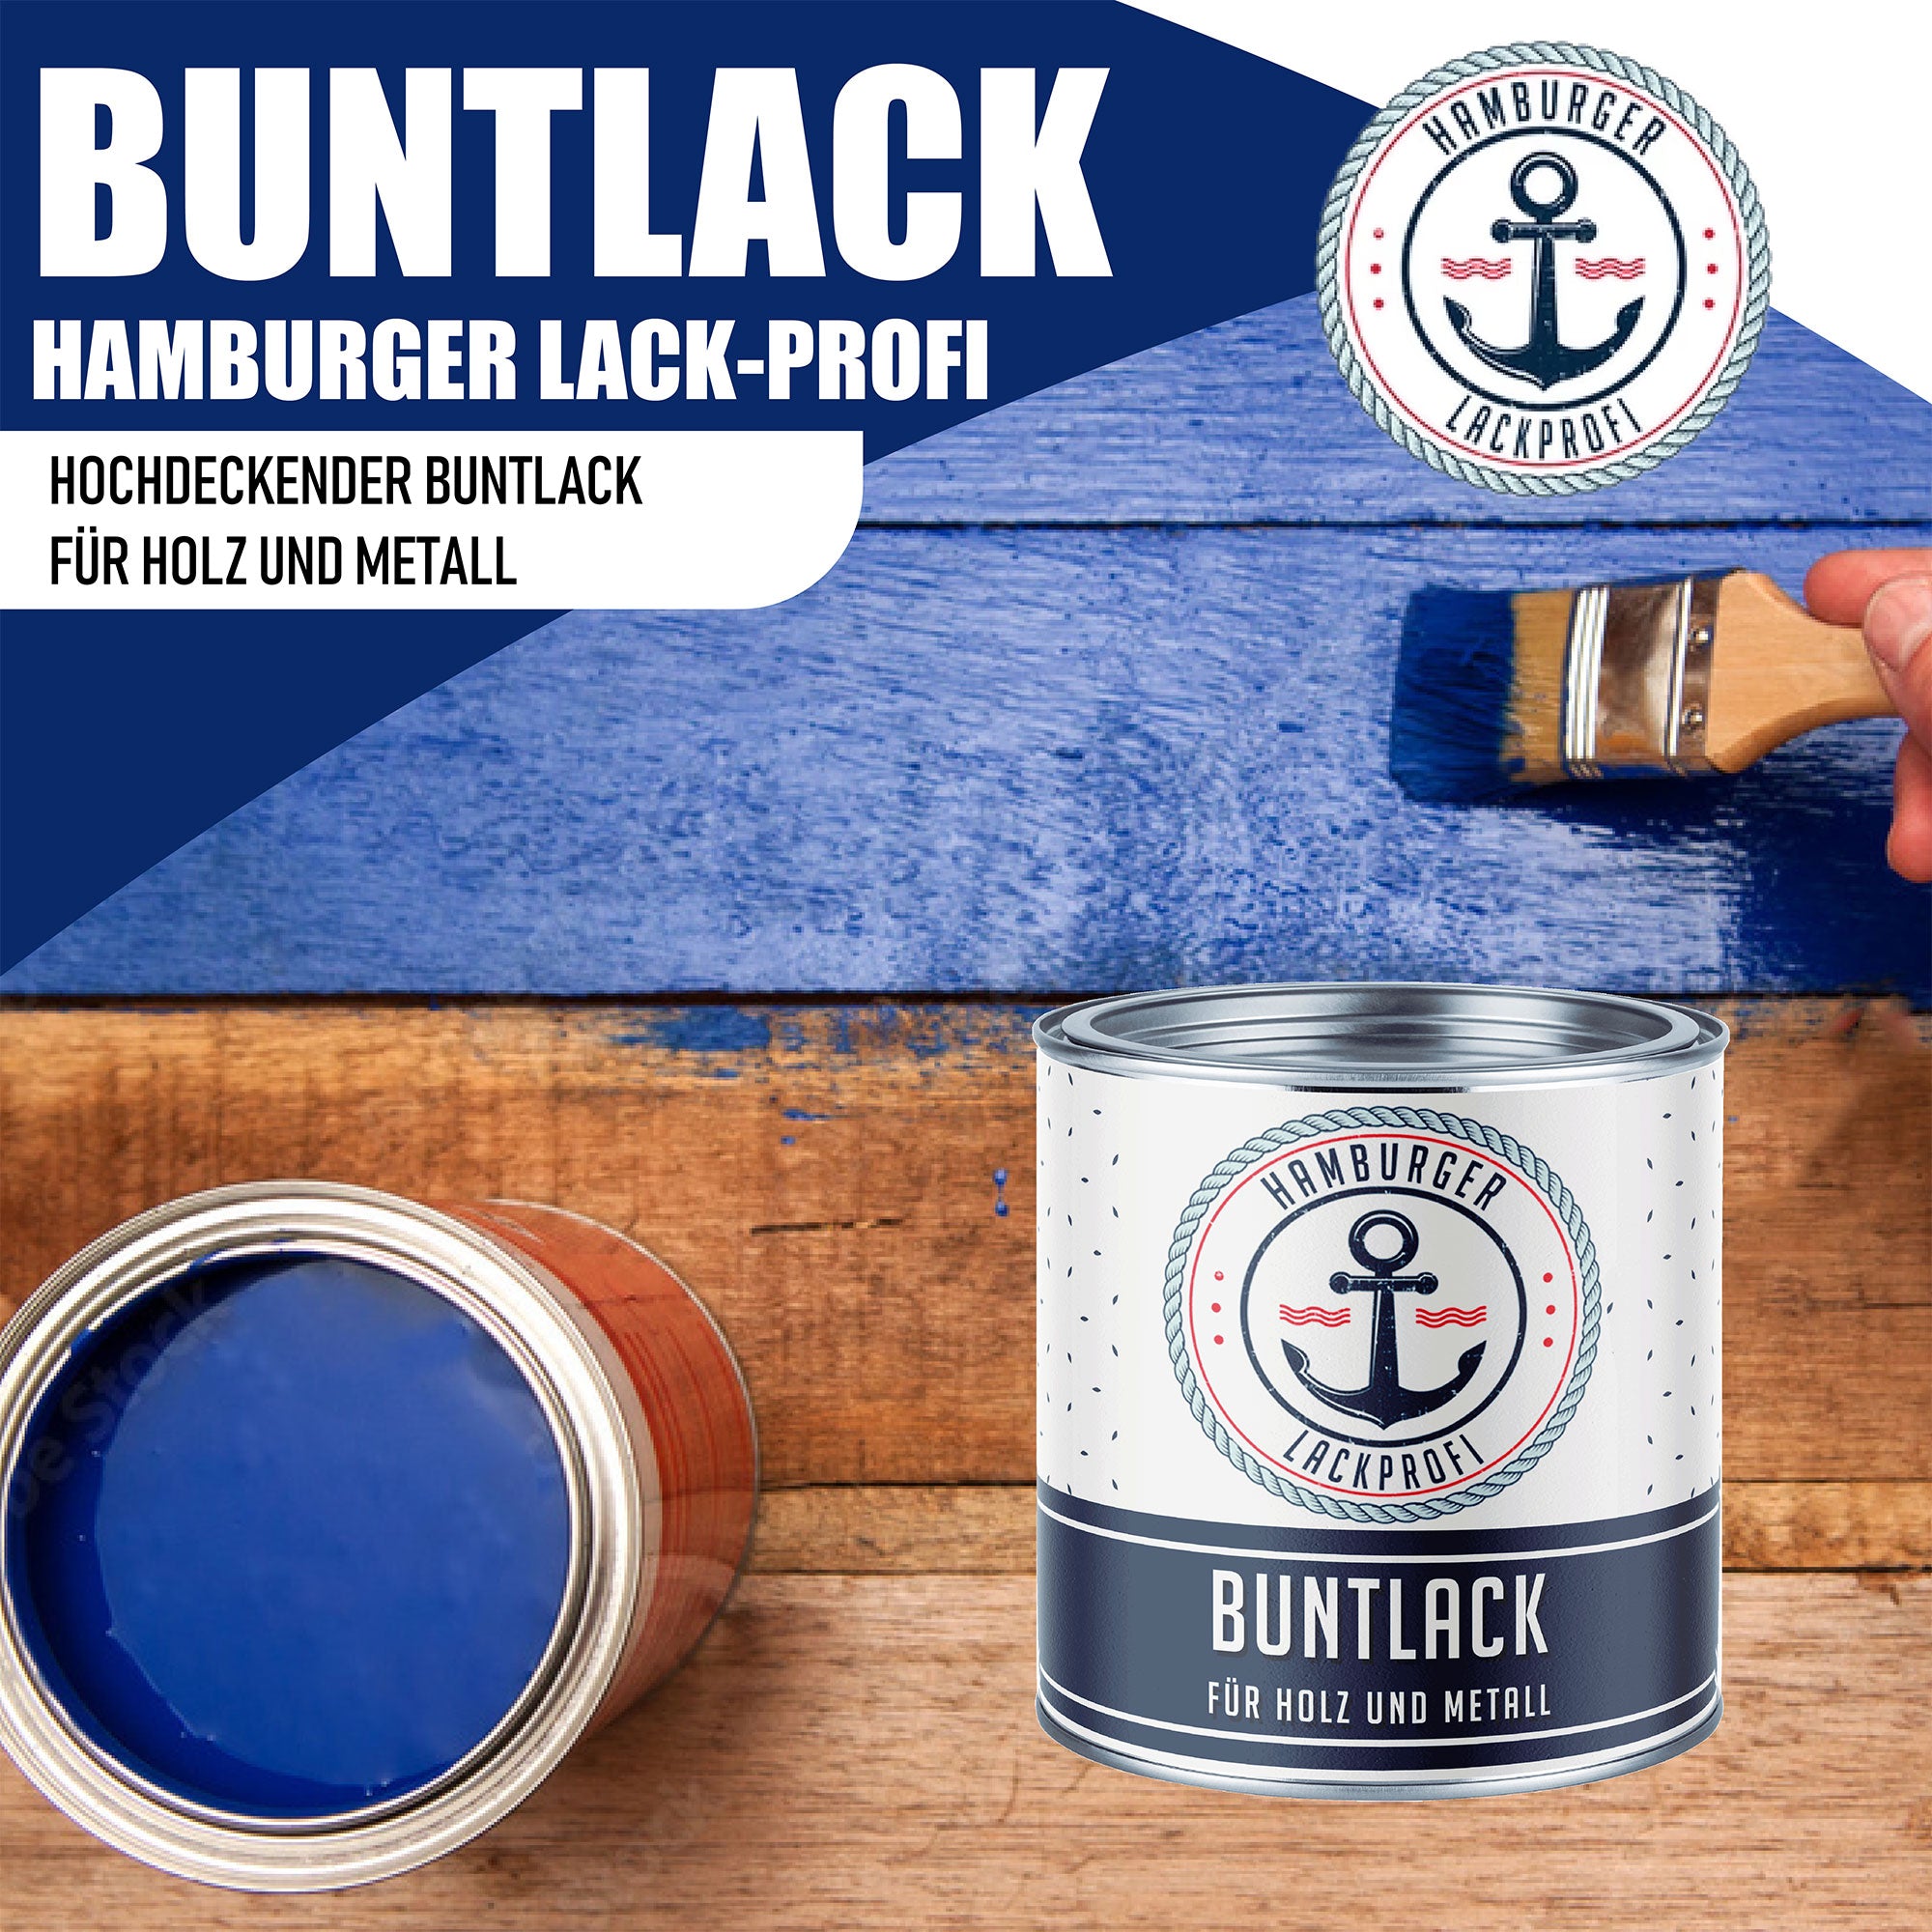 Hamburger Lack-Profi Buntlack in Quarzgrau RAL 7039 mit Lackierset (X300) & Verdünnung (1 L) - 30% Sparangebot